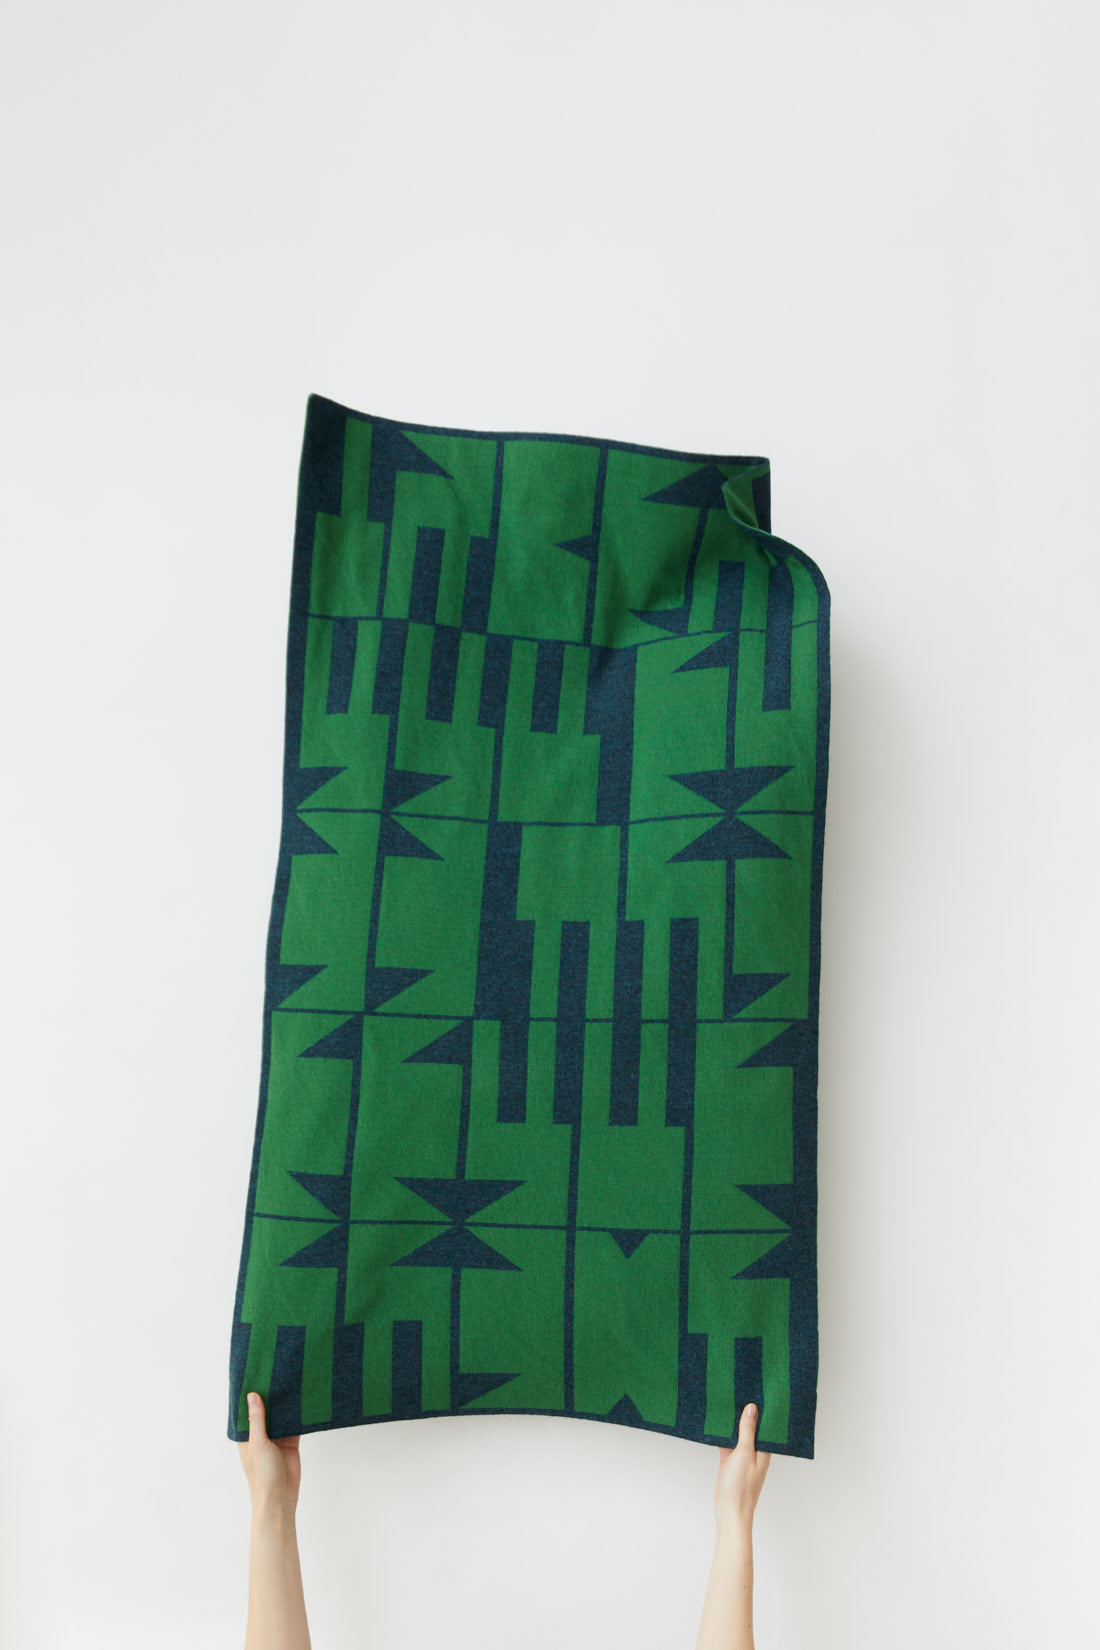 Mini Blanket "Keel" - Ink + Oxide Green